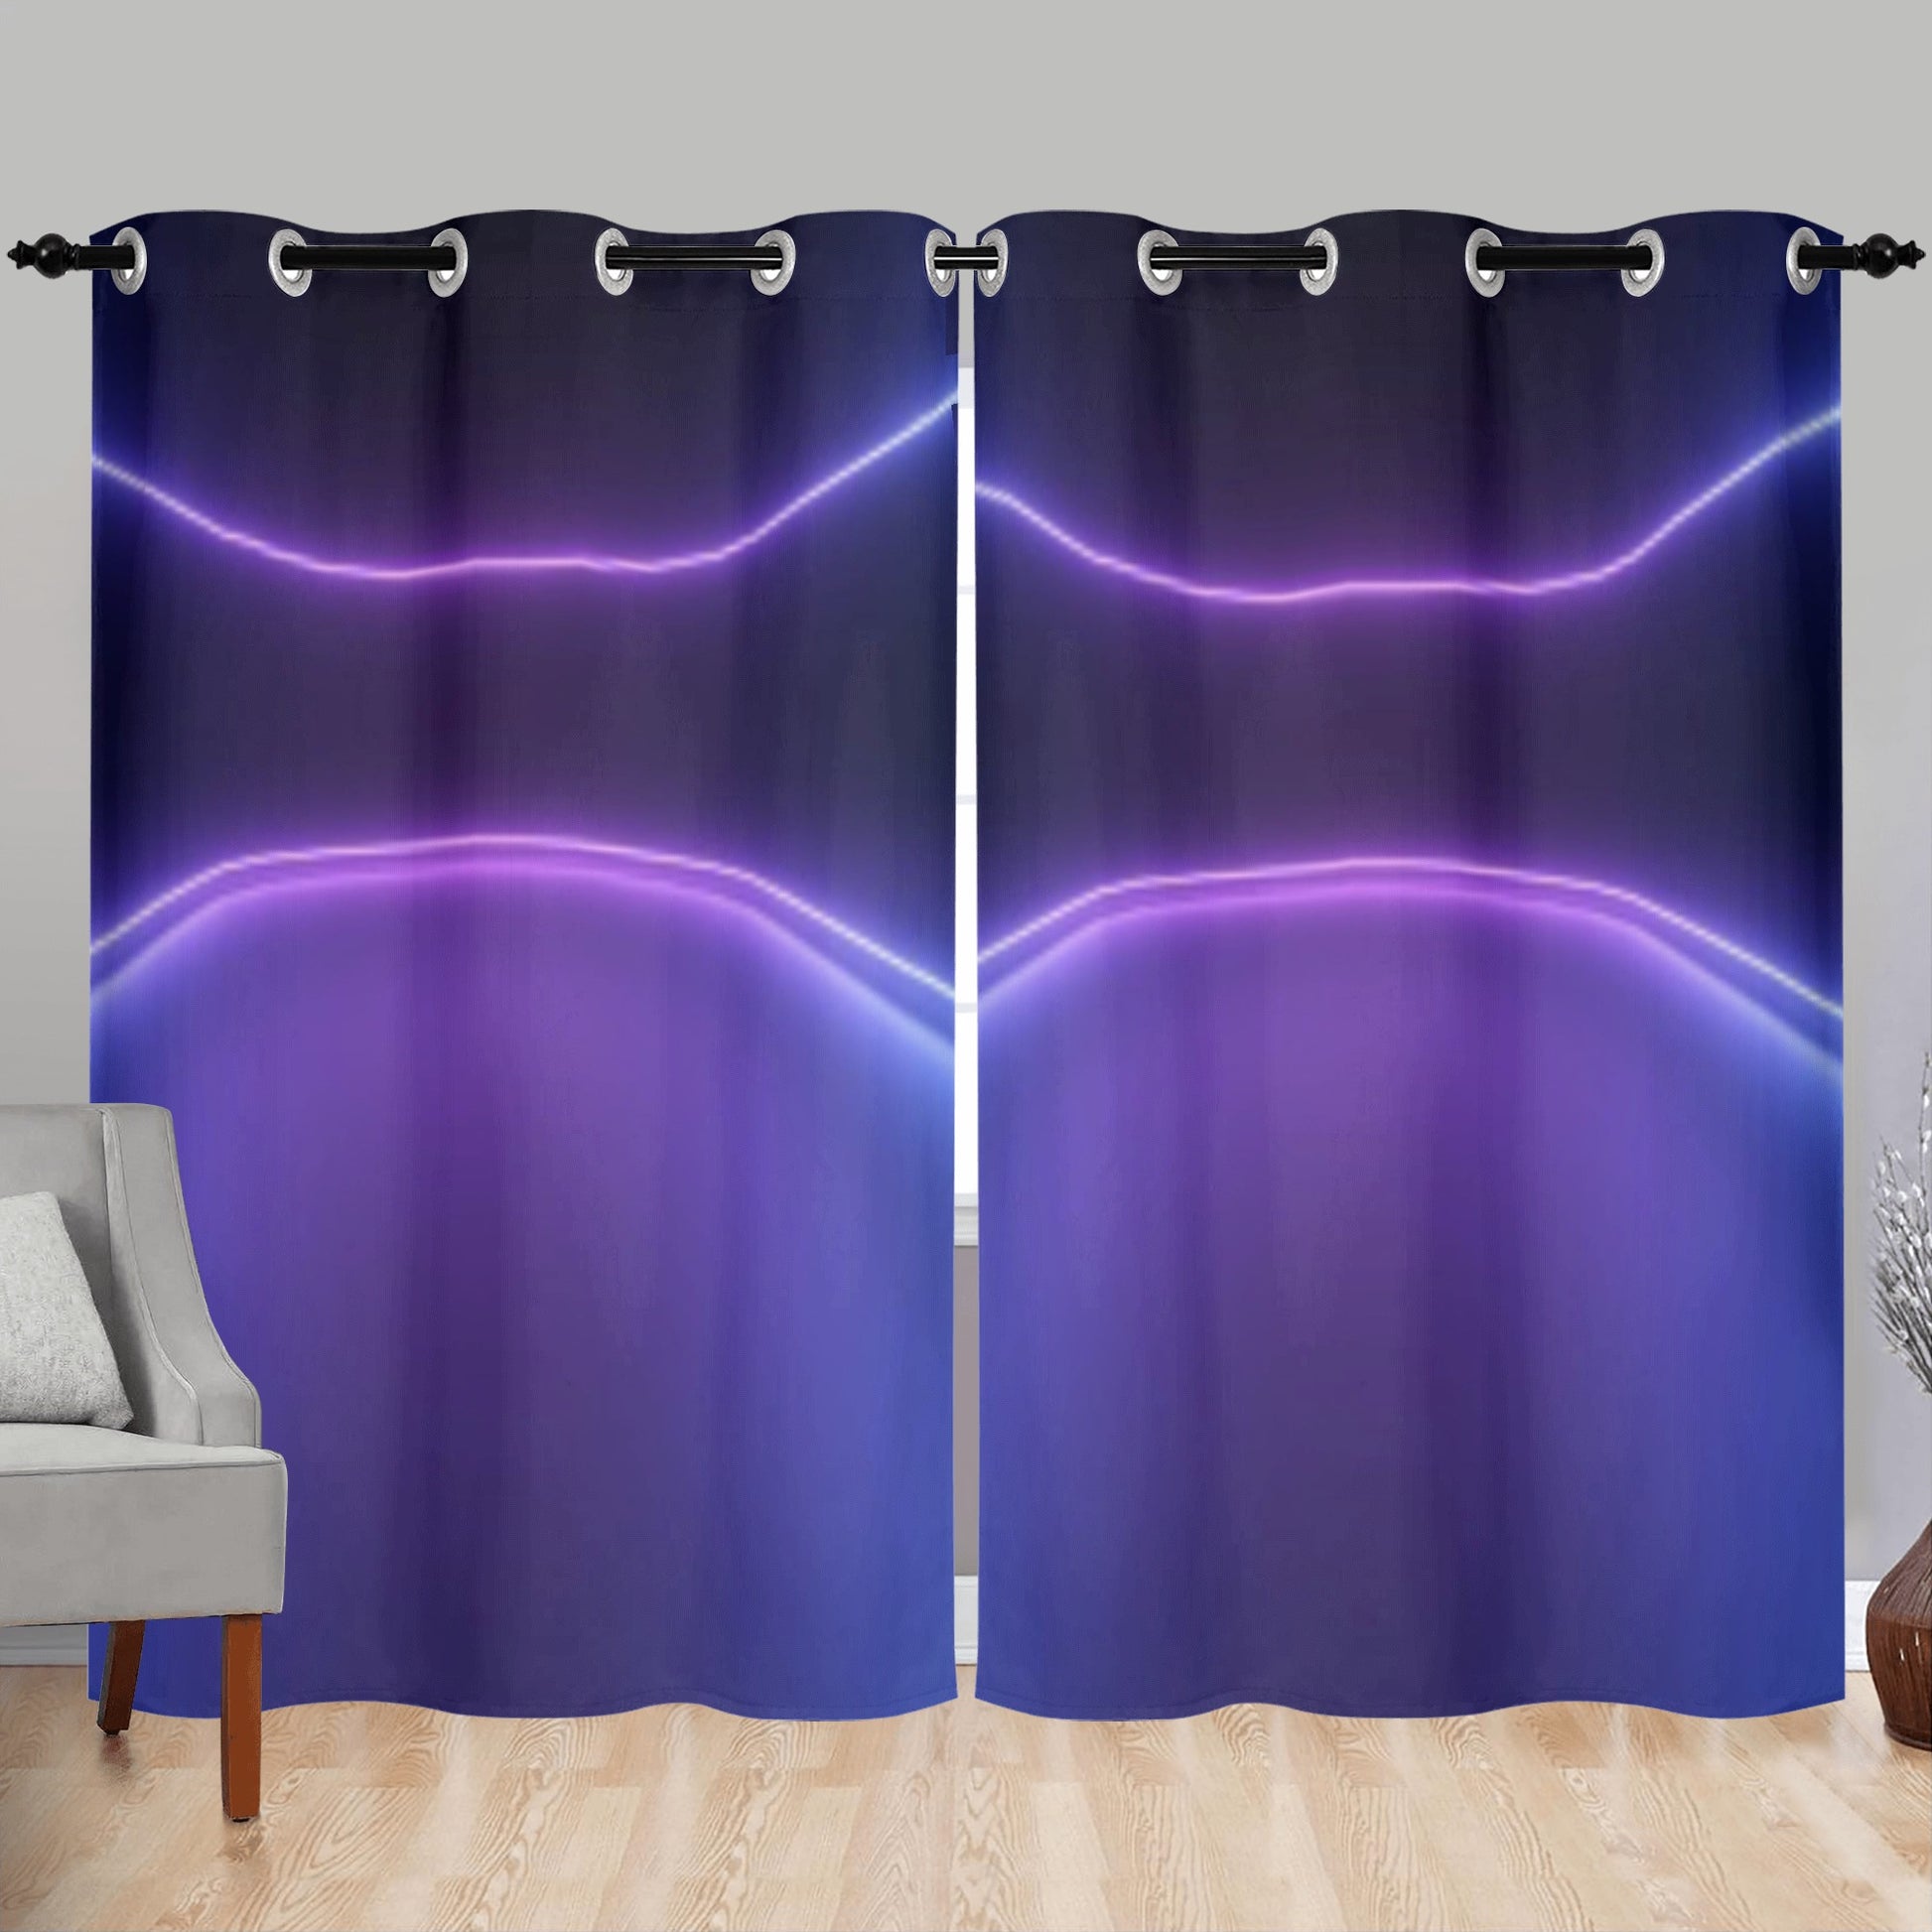 FZ Home Curtain - FZwear